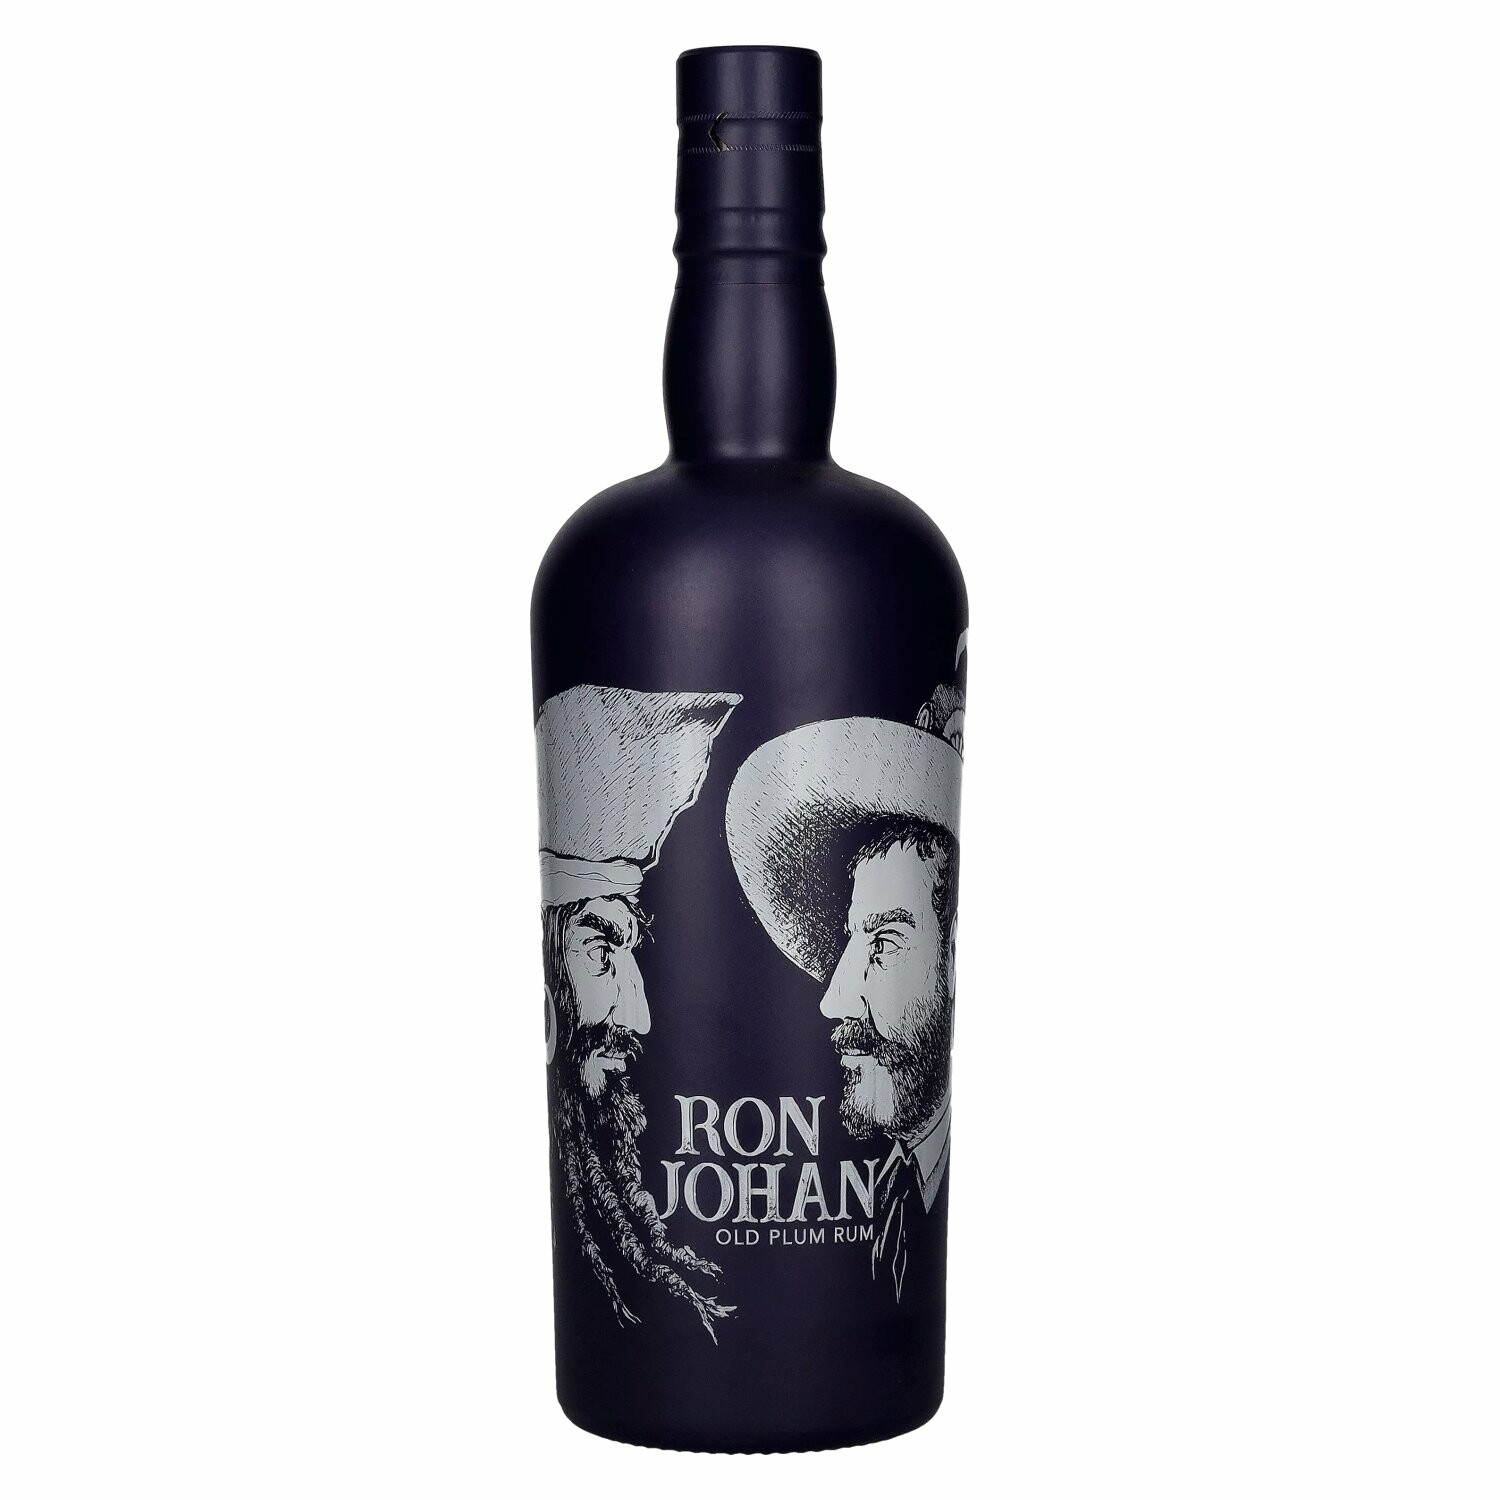 Ron Johan Old Plum Rum 41% Vol. 0,7l